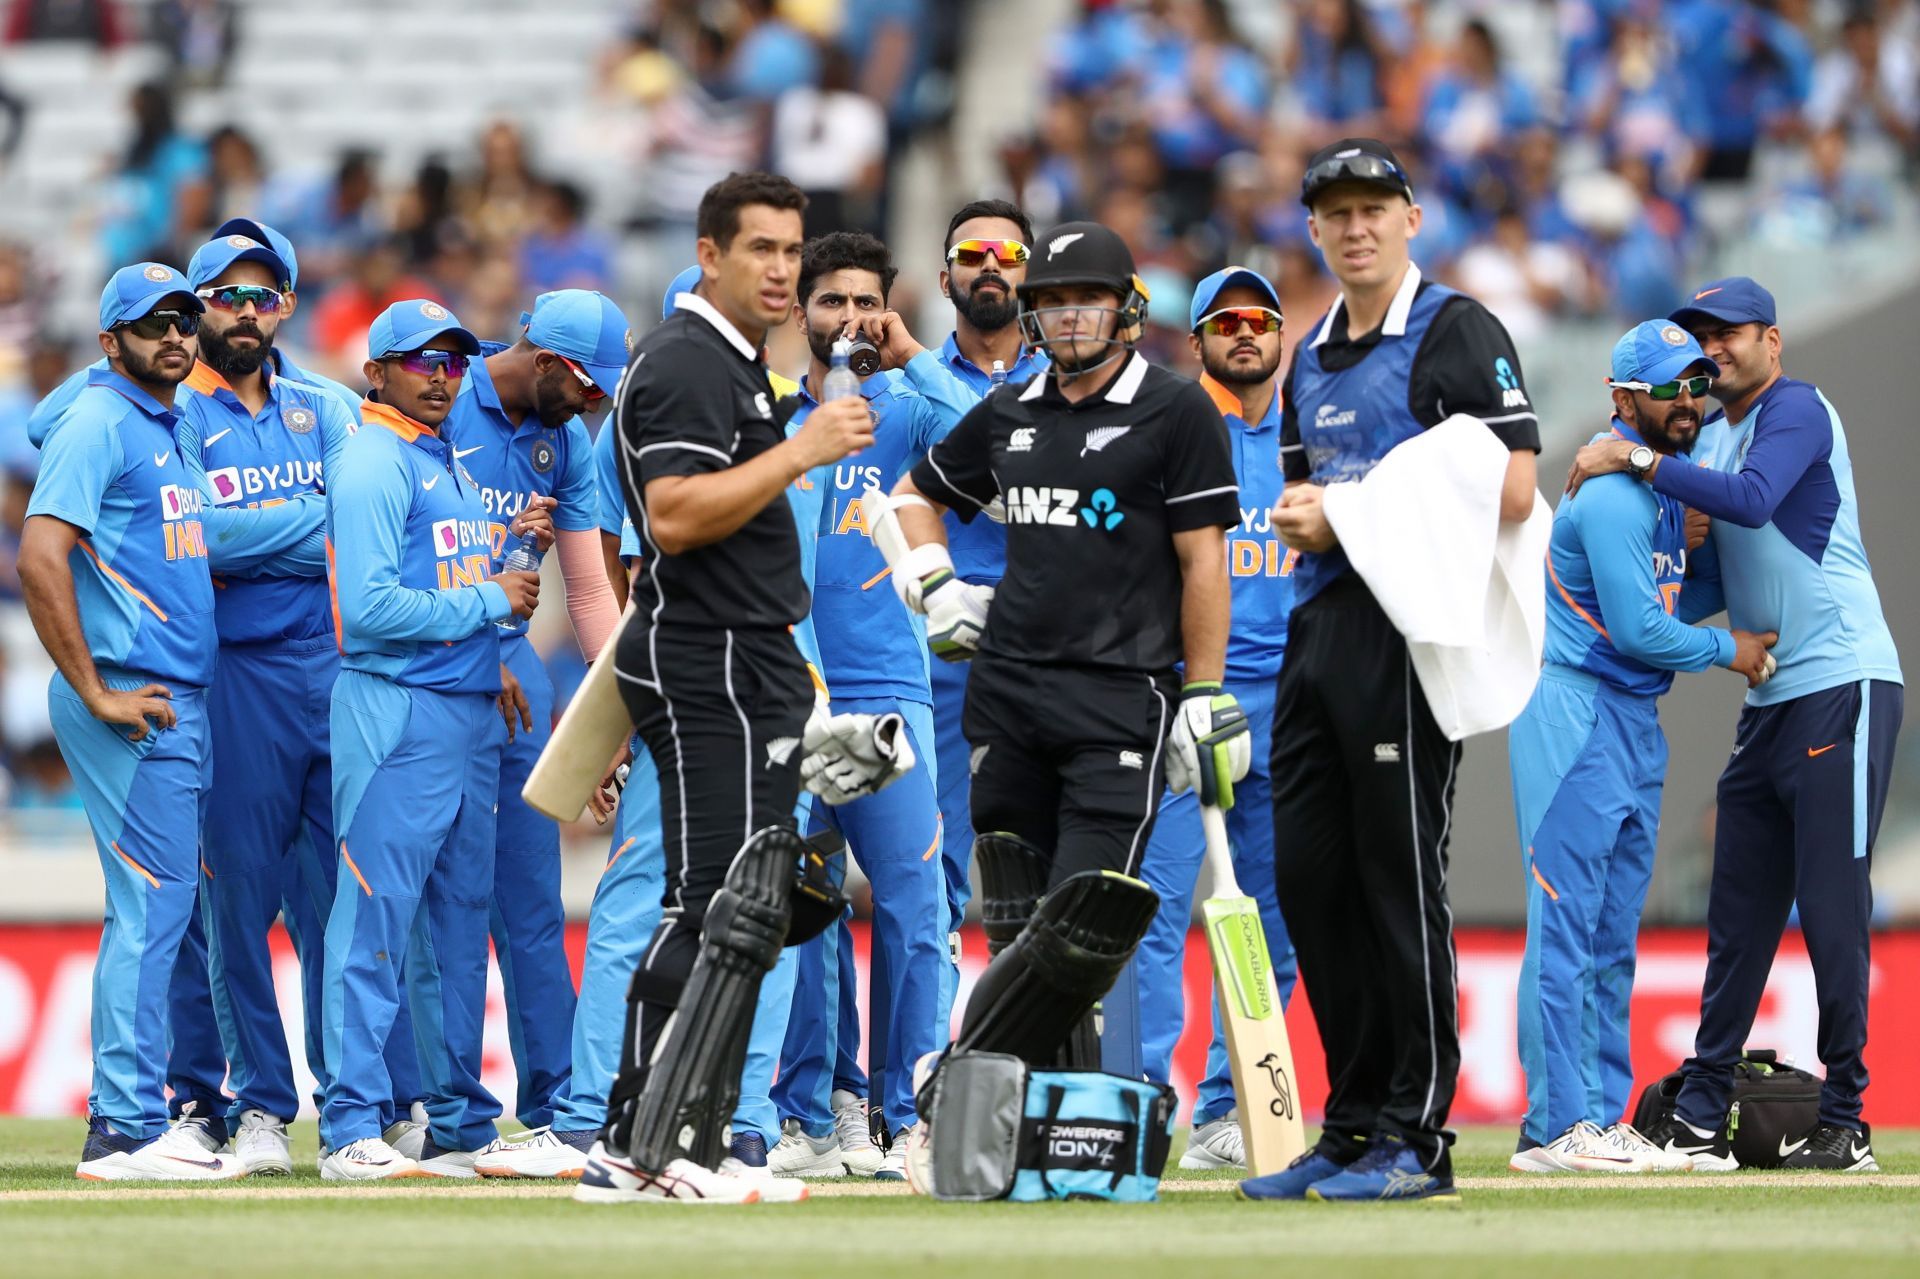 New Zealand v India - ODI: Game 2